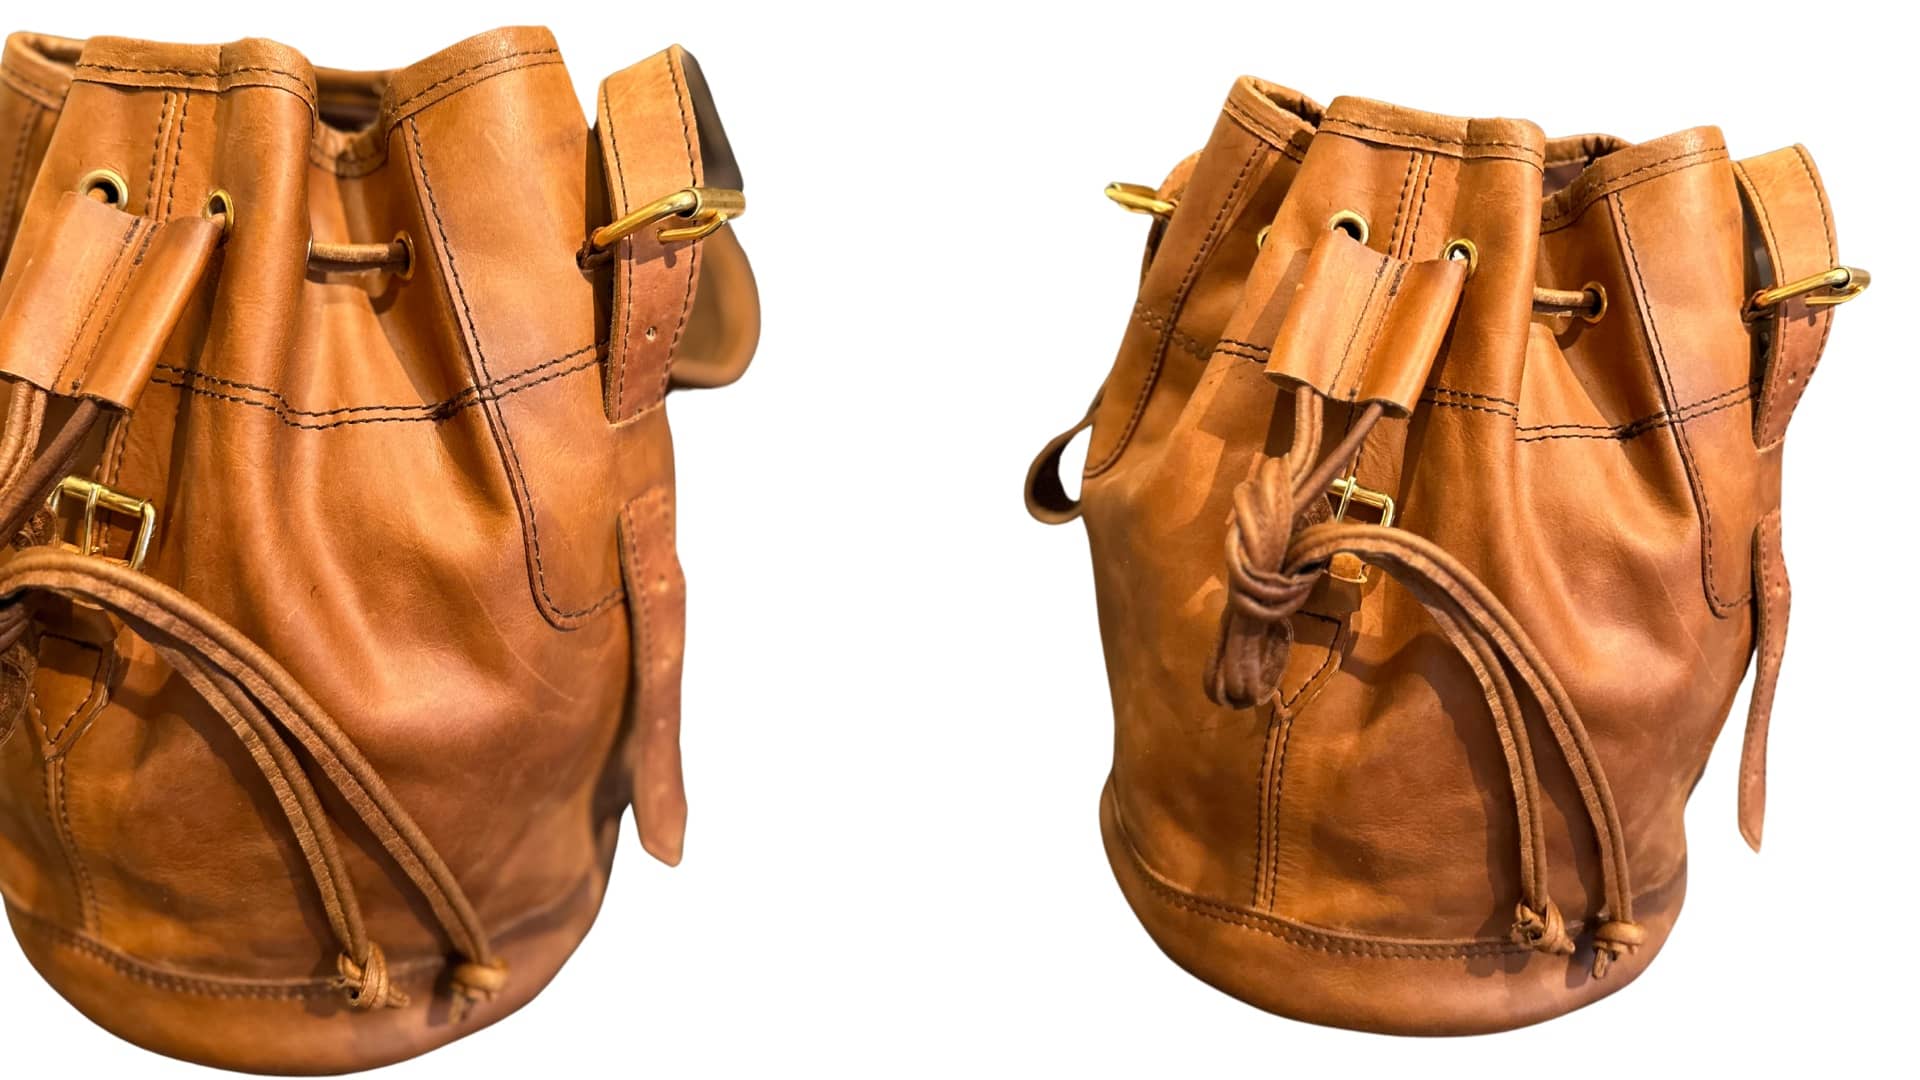 Cartridge duffel leather bag